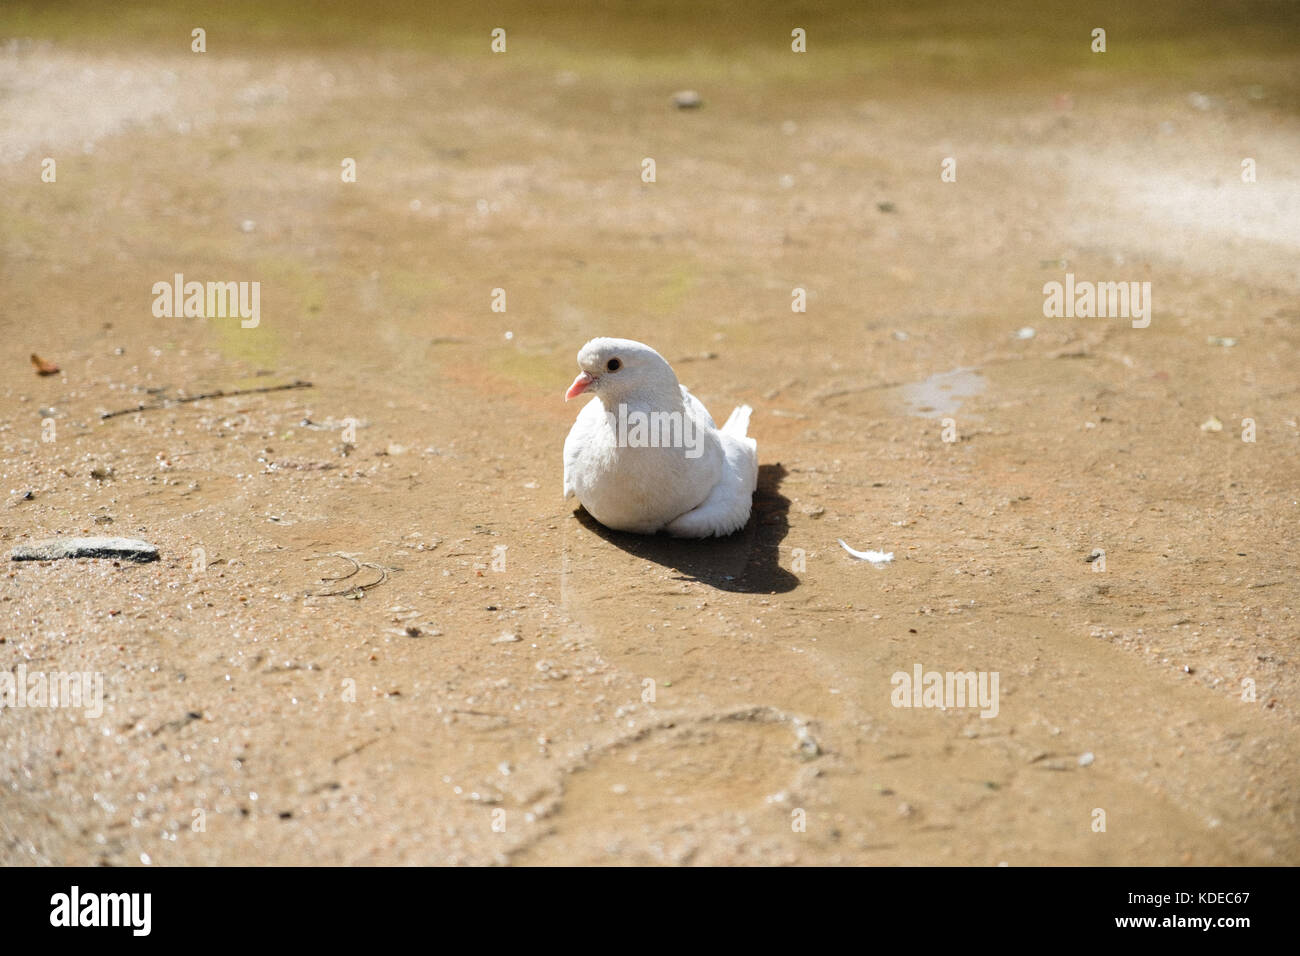 A dove sitting on a sandy floor Stock Photo